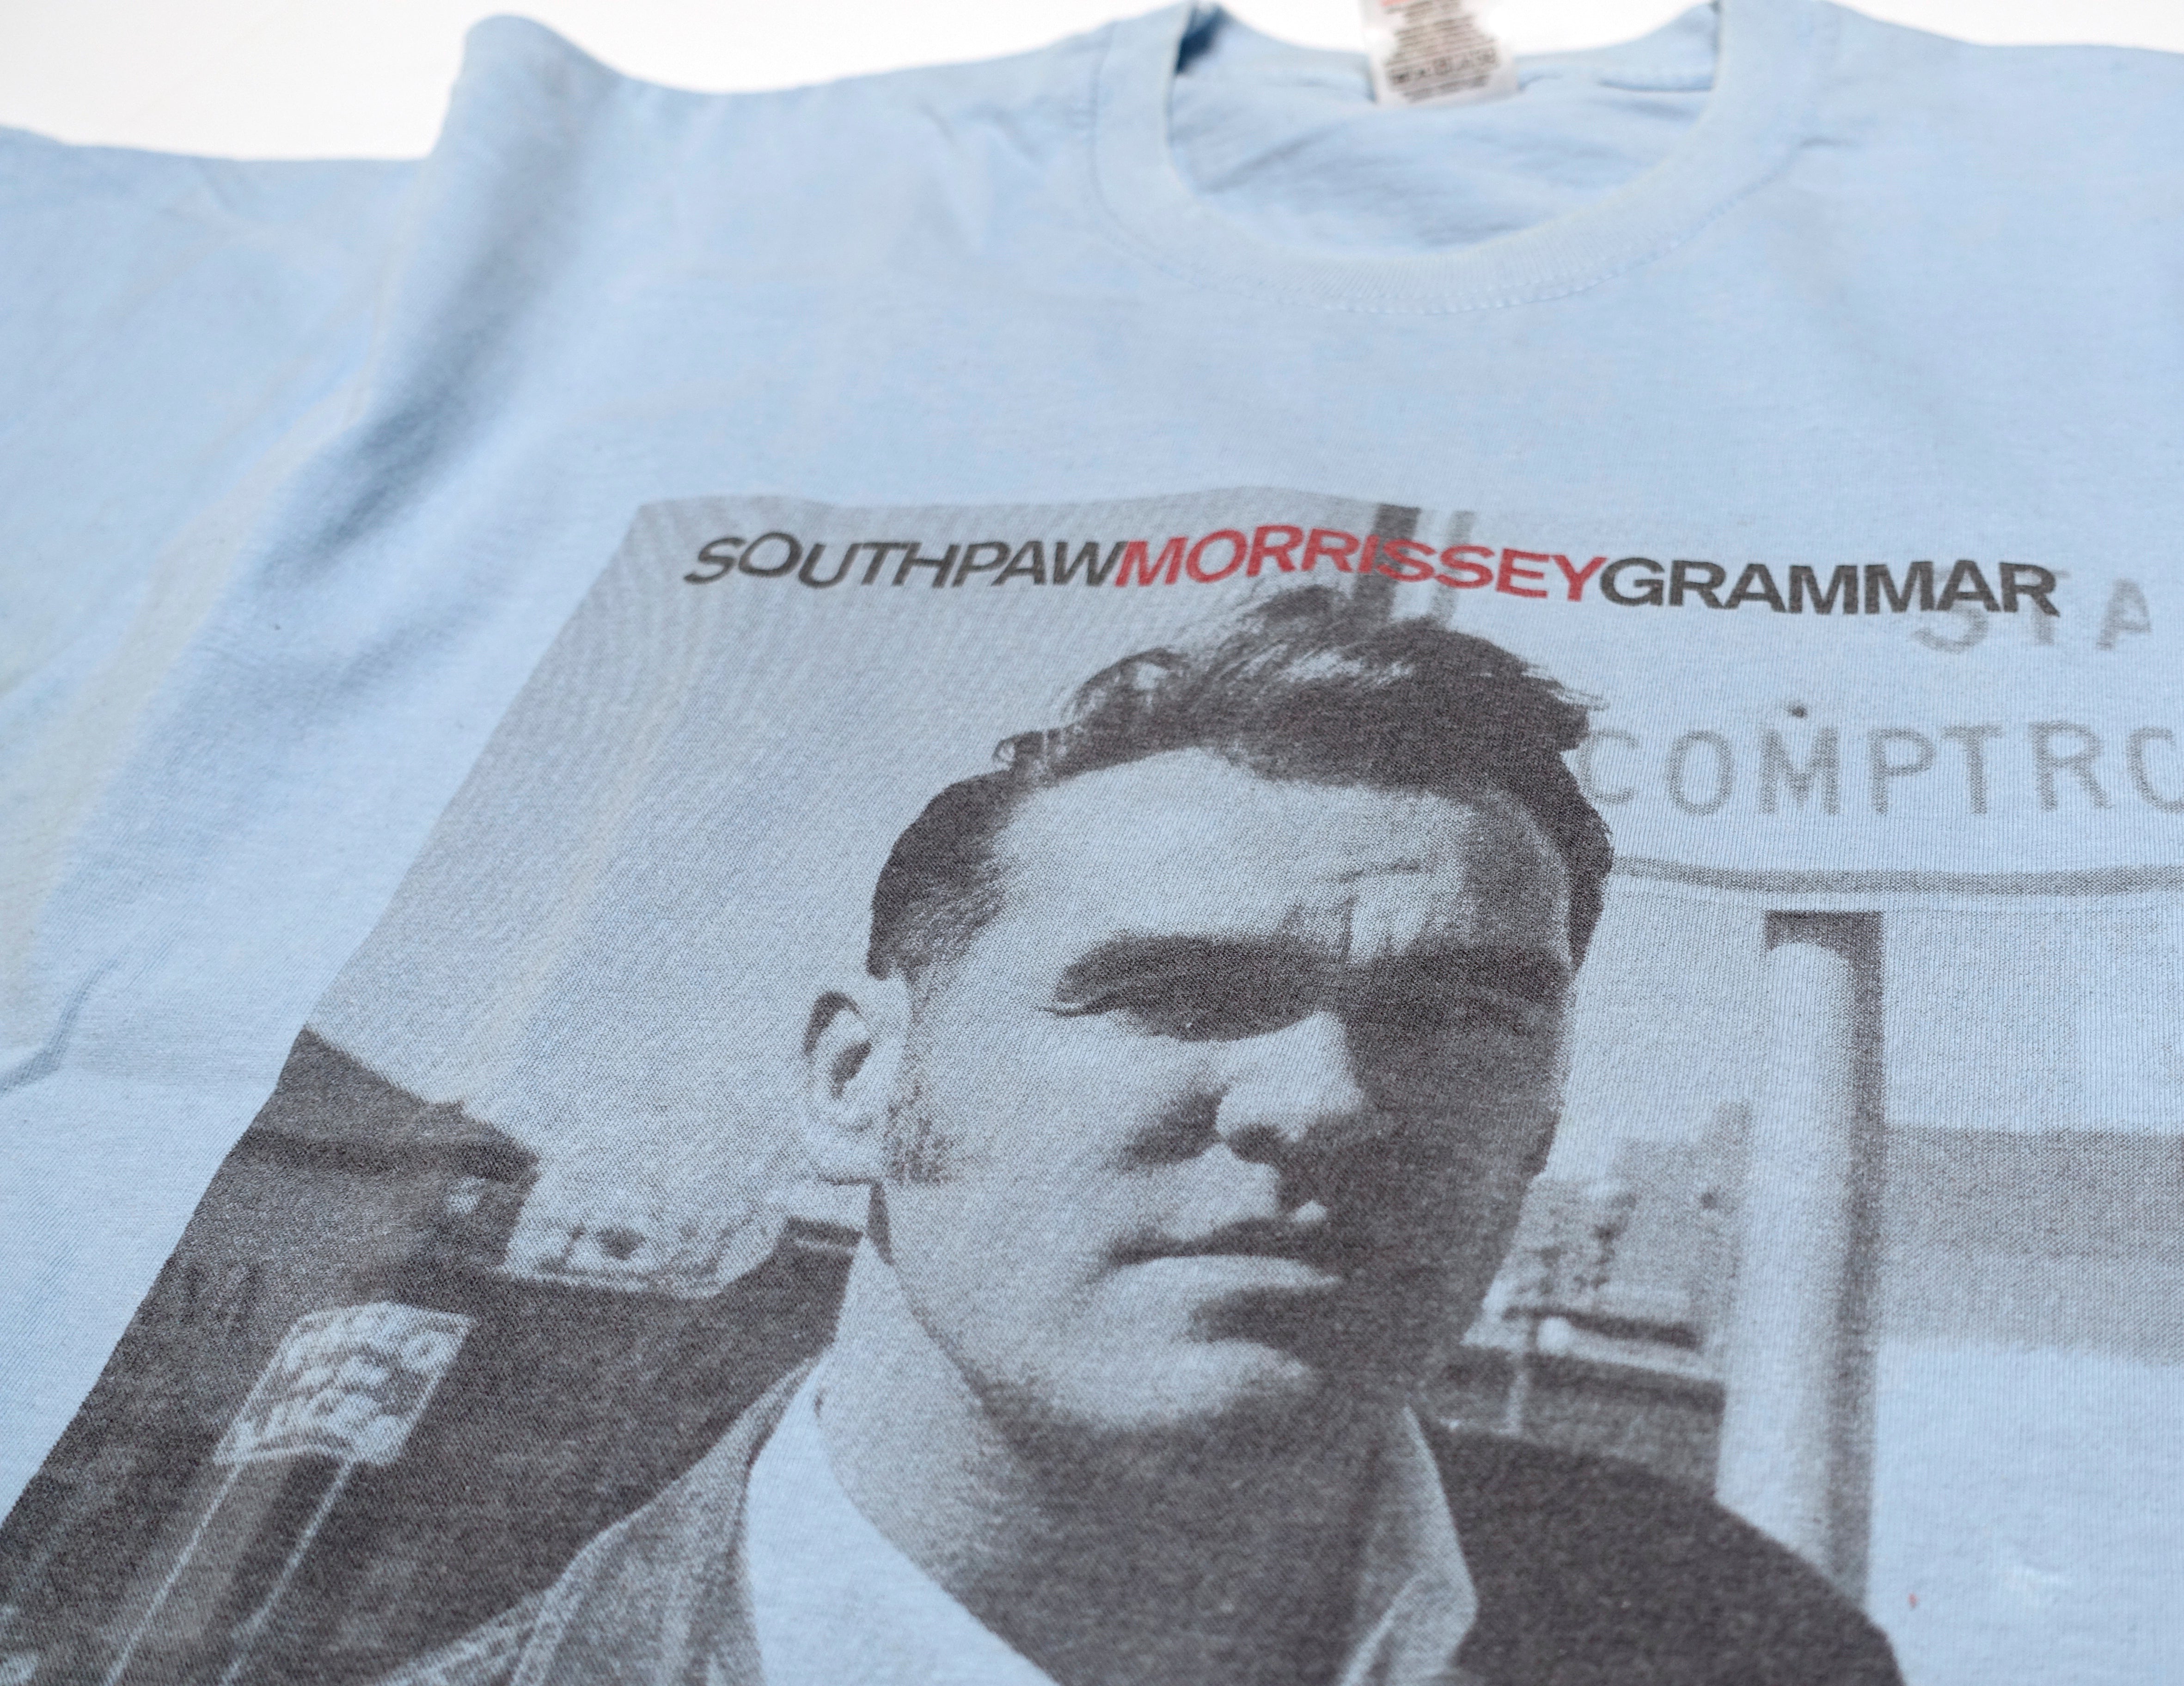 Morrissey - Southpaw Grammar Tour Of Refusal EU 2009 Tour Shirt Size Large